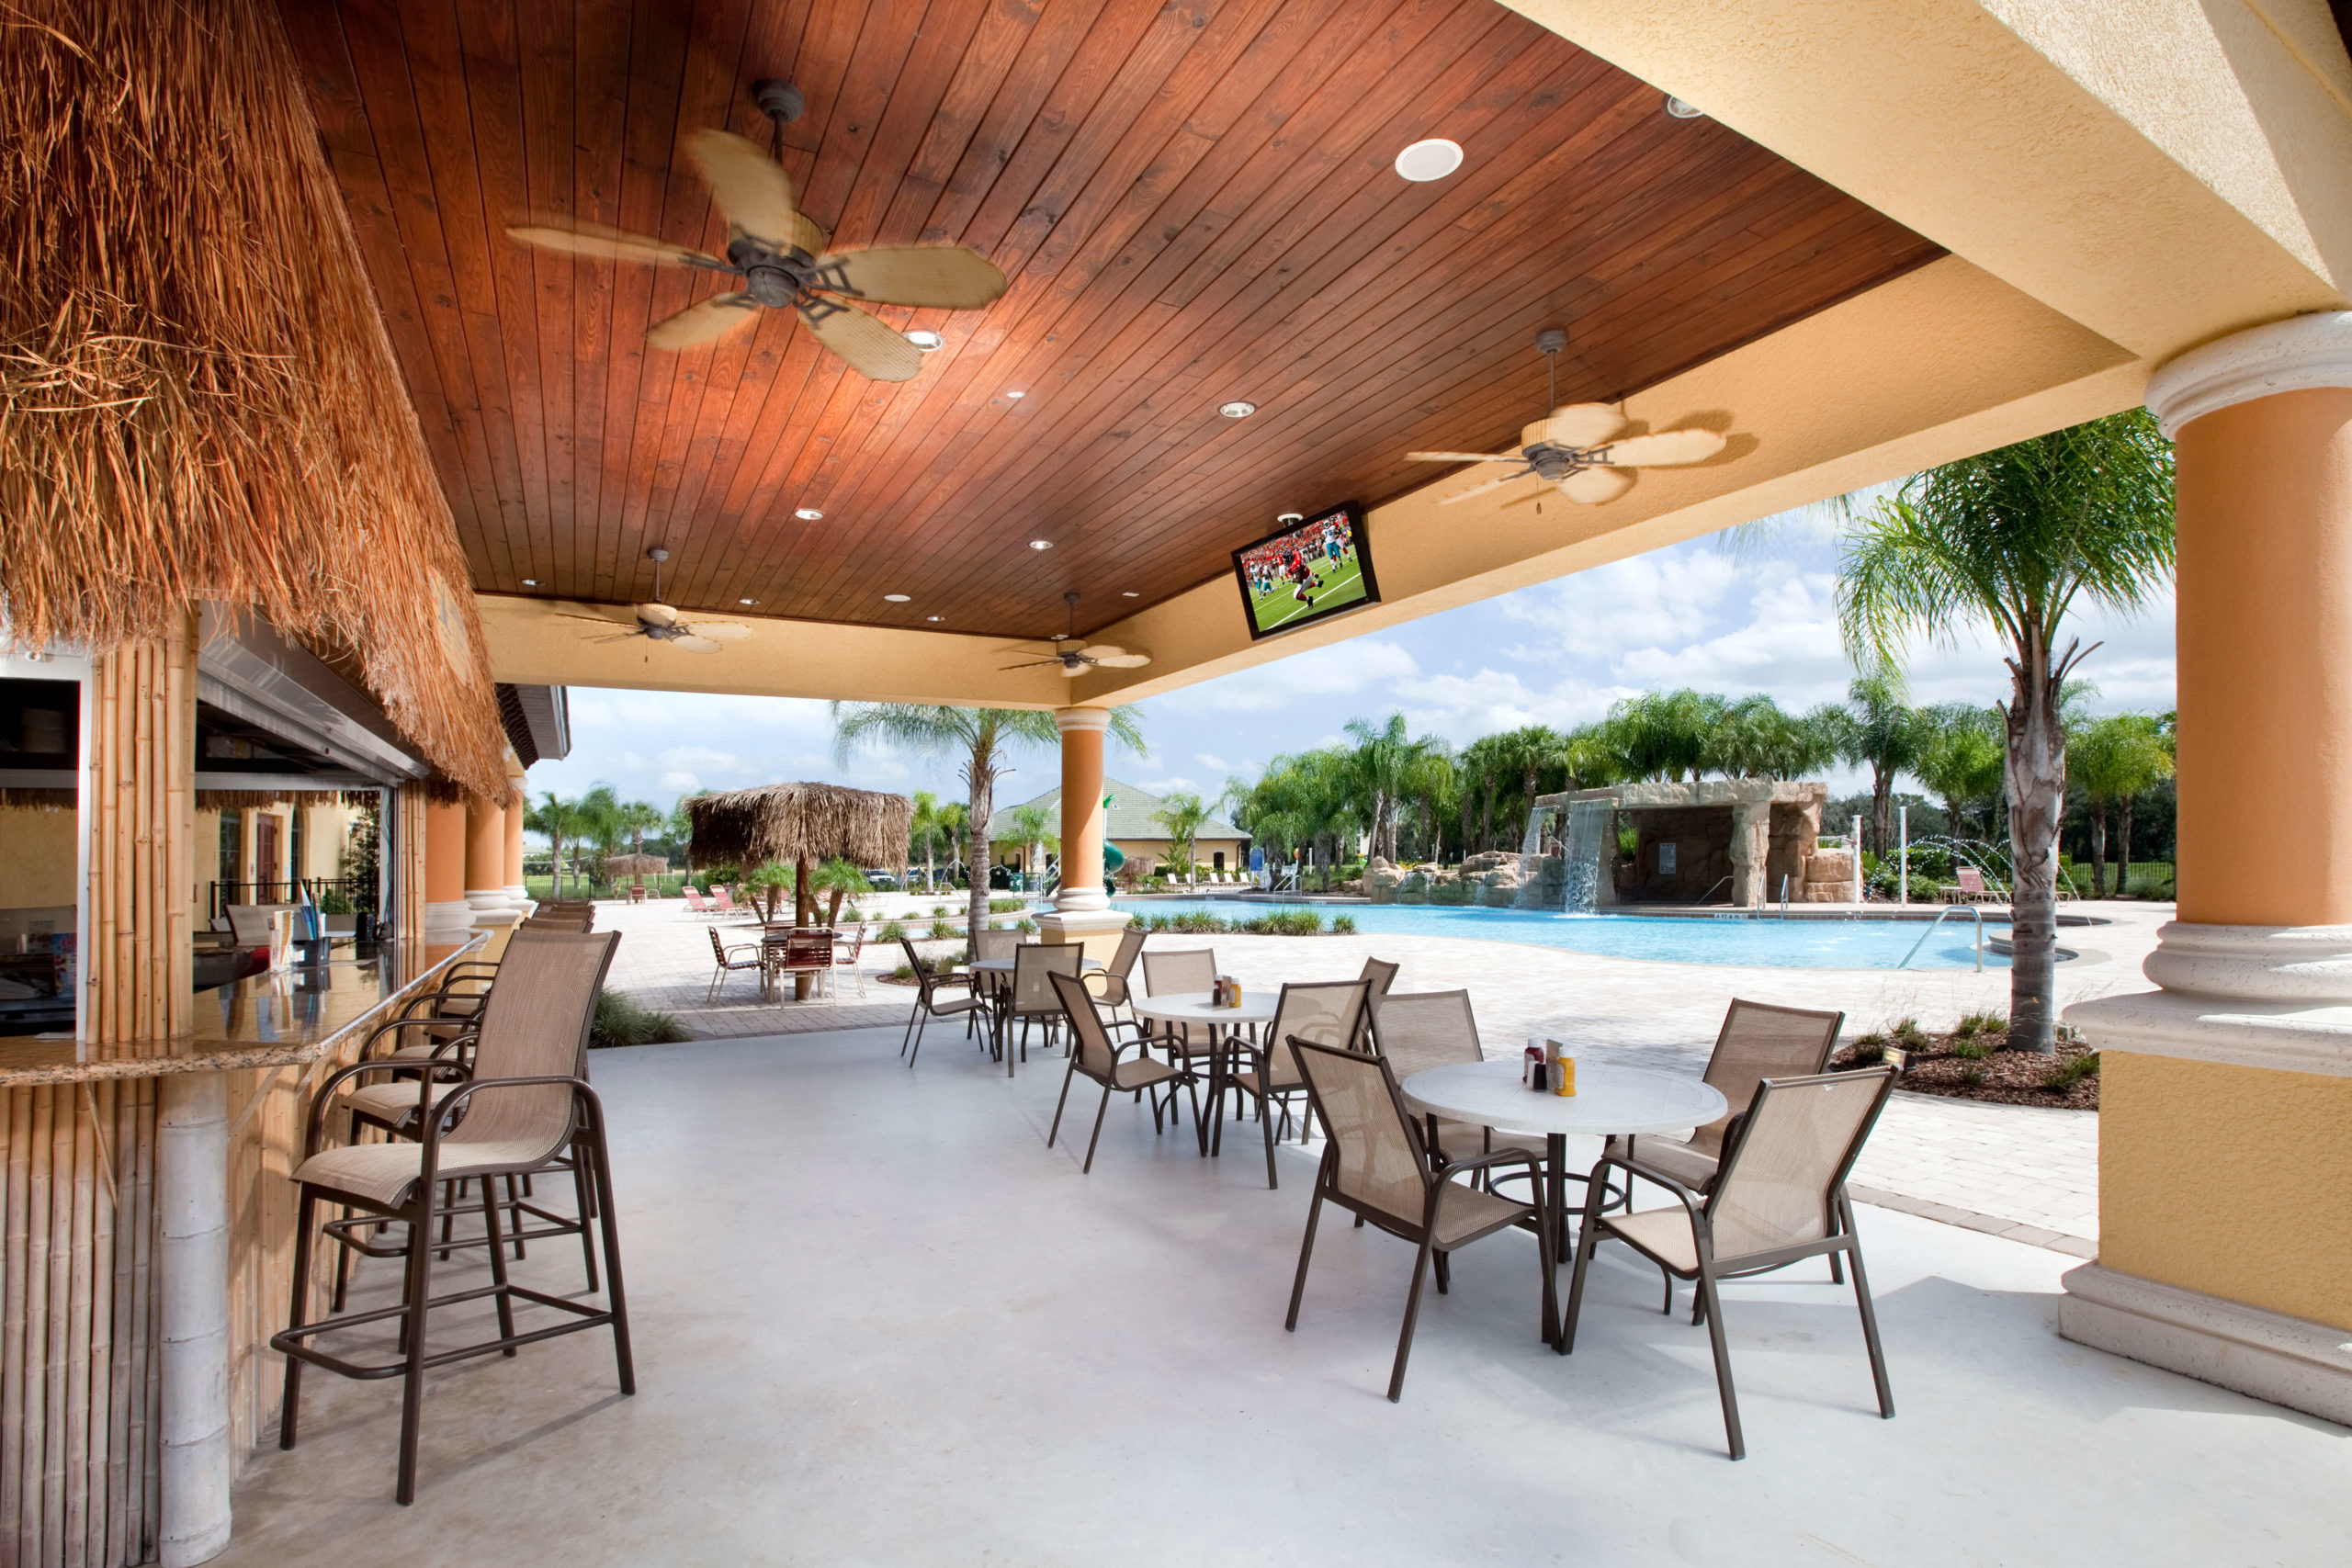 Luxury Paradise Palms Orlando Resort Rentals